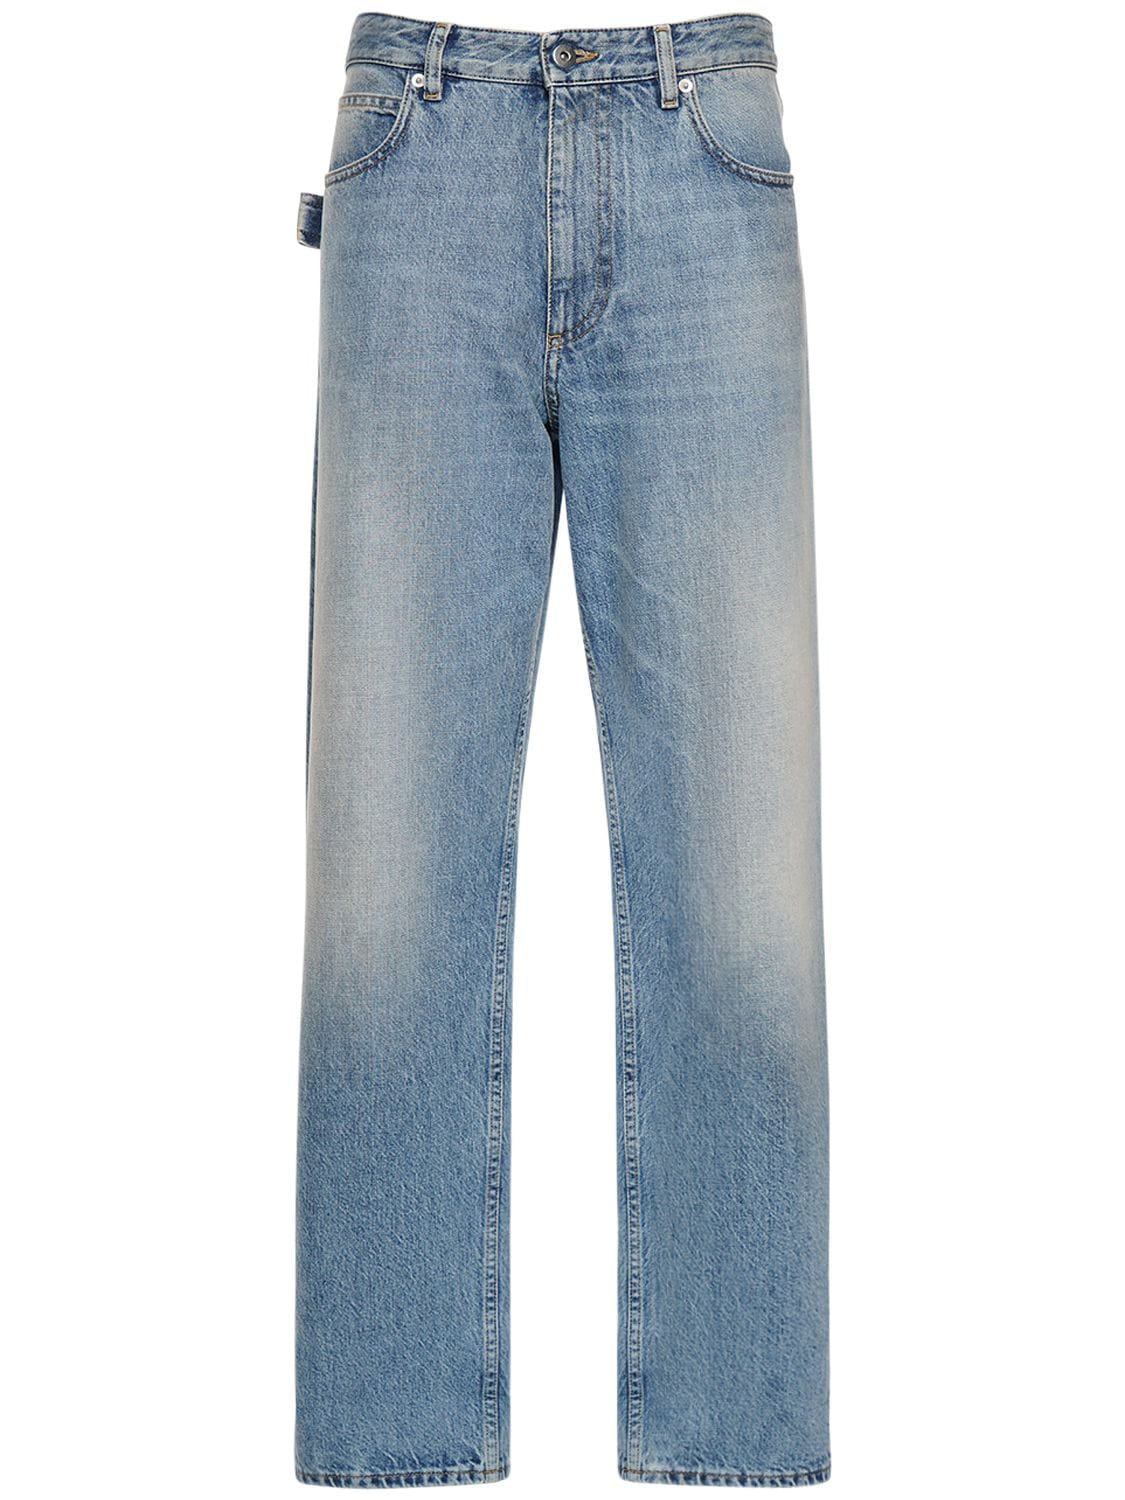 Vintage Medium Indigo Denim Jeans